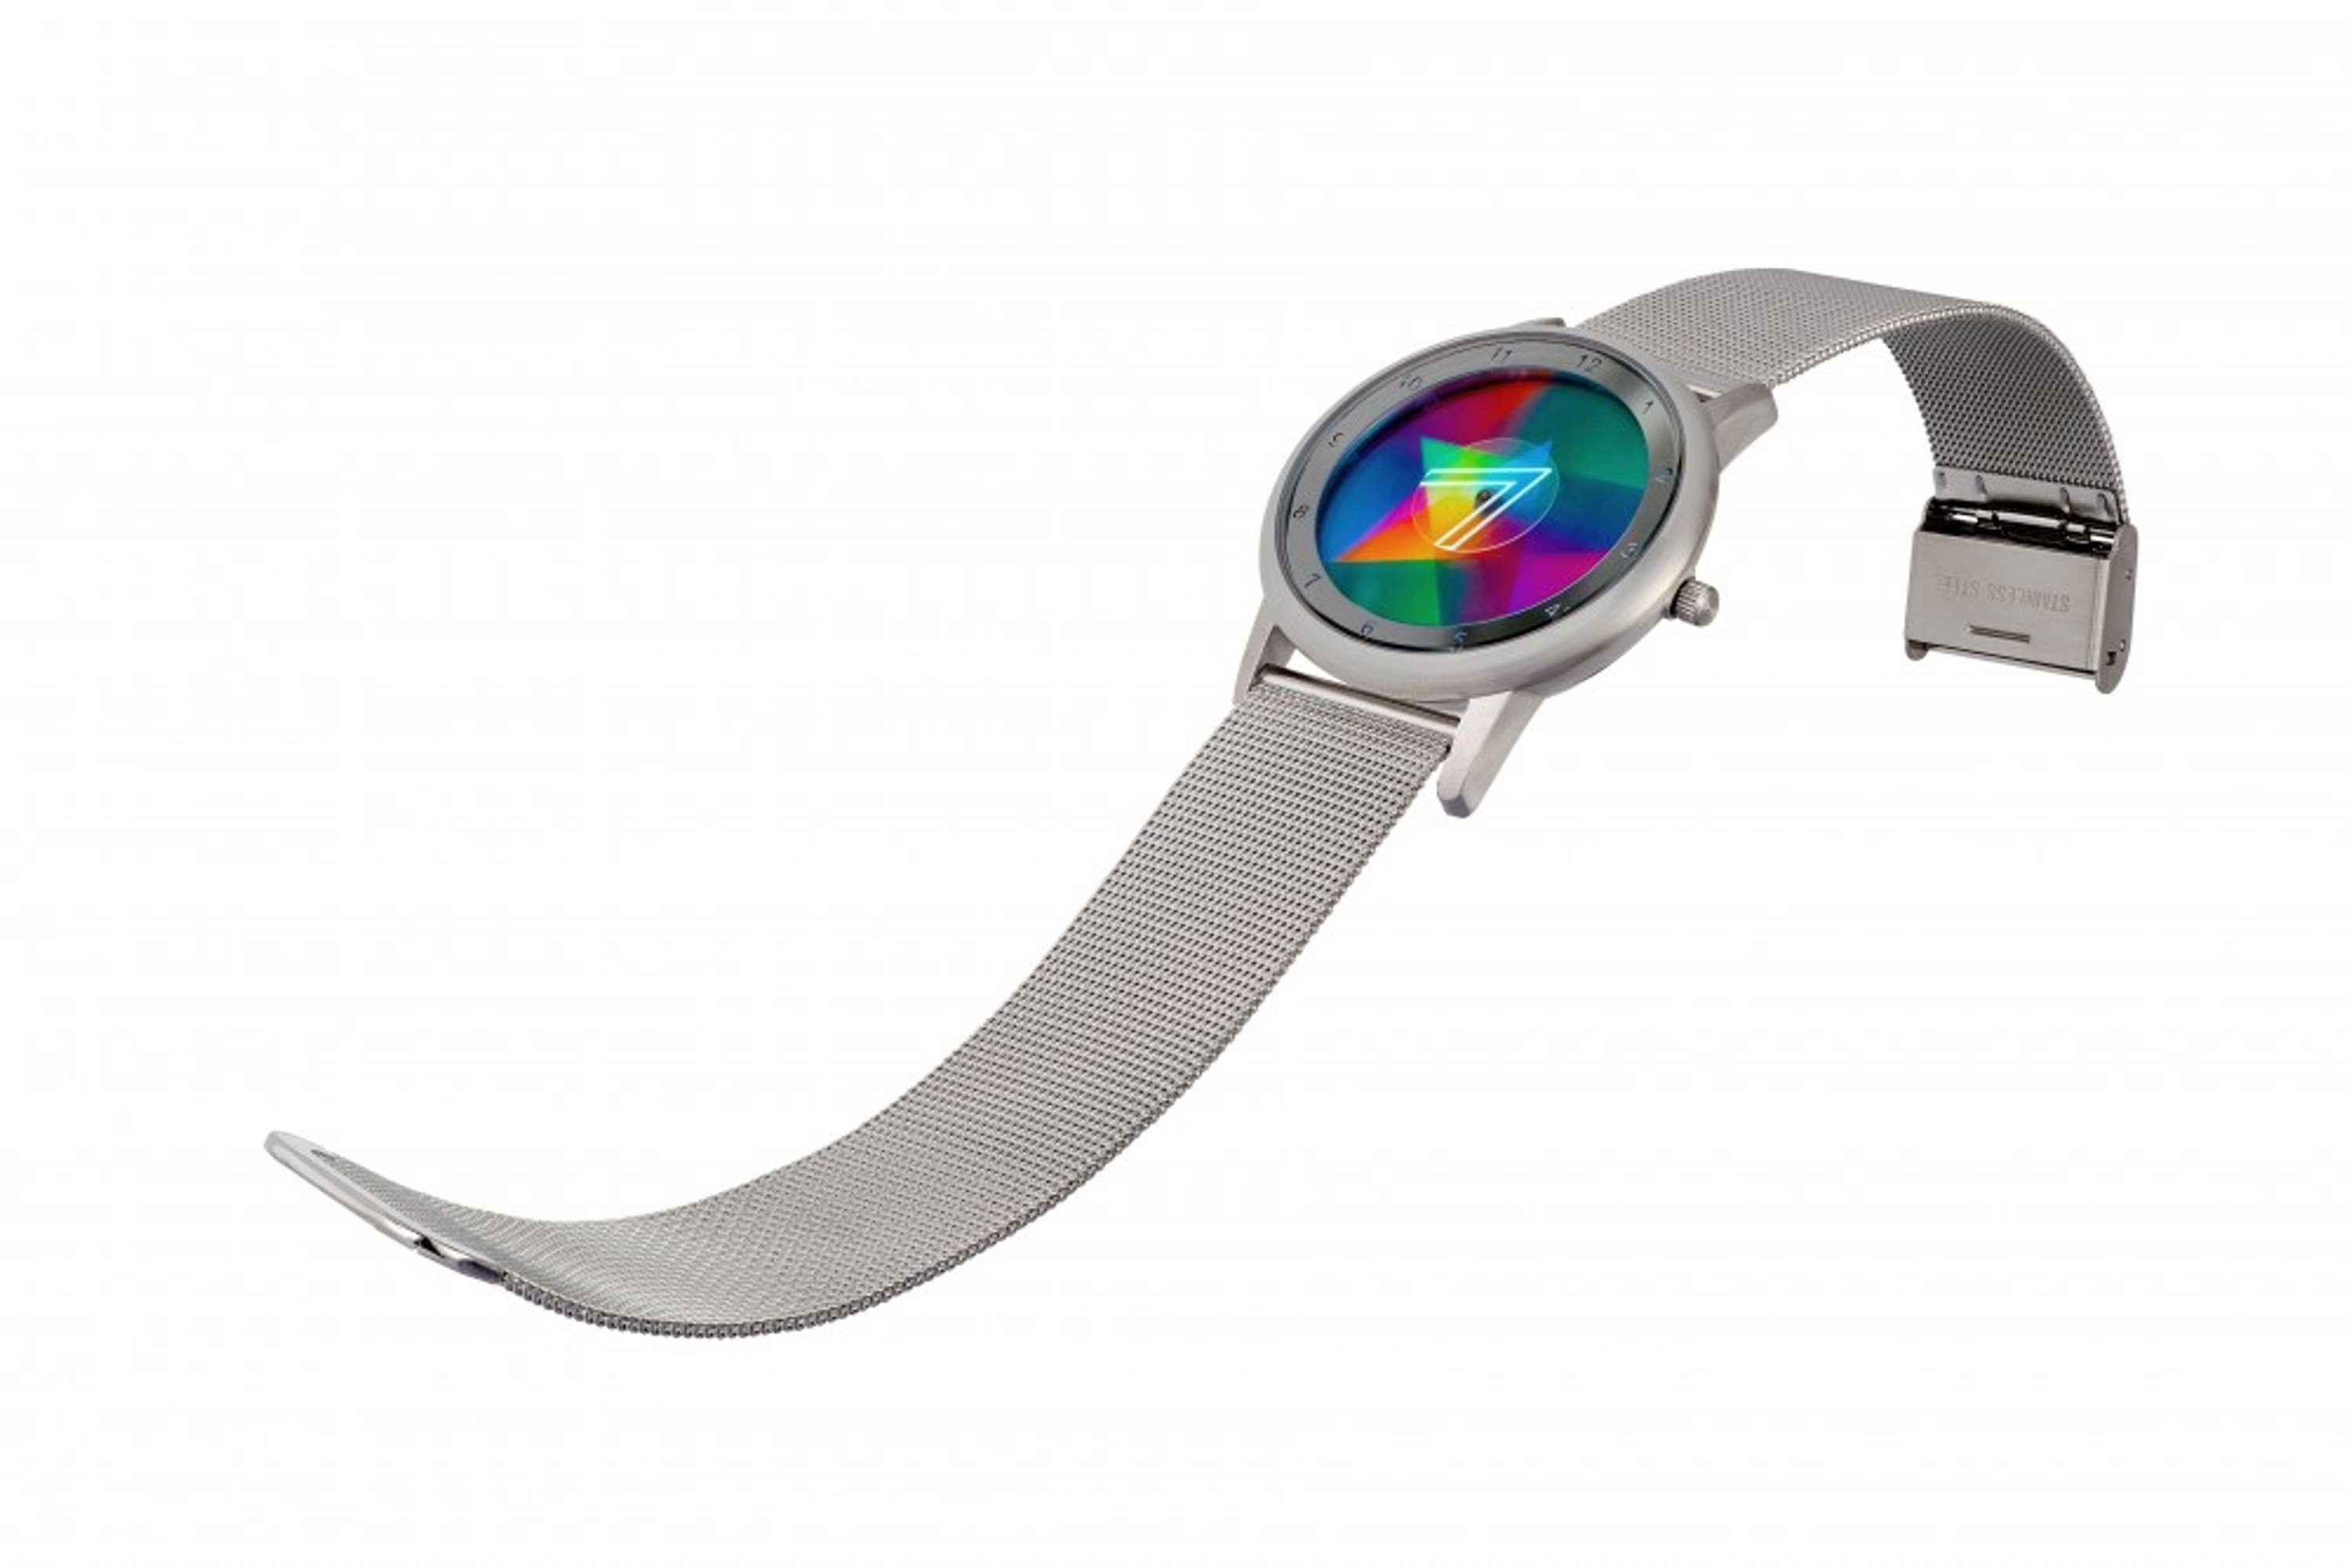 Rainbow Quarzuhr Vee Avantgardia Watch